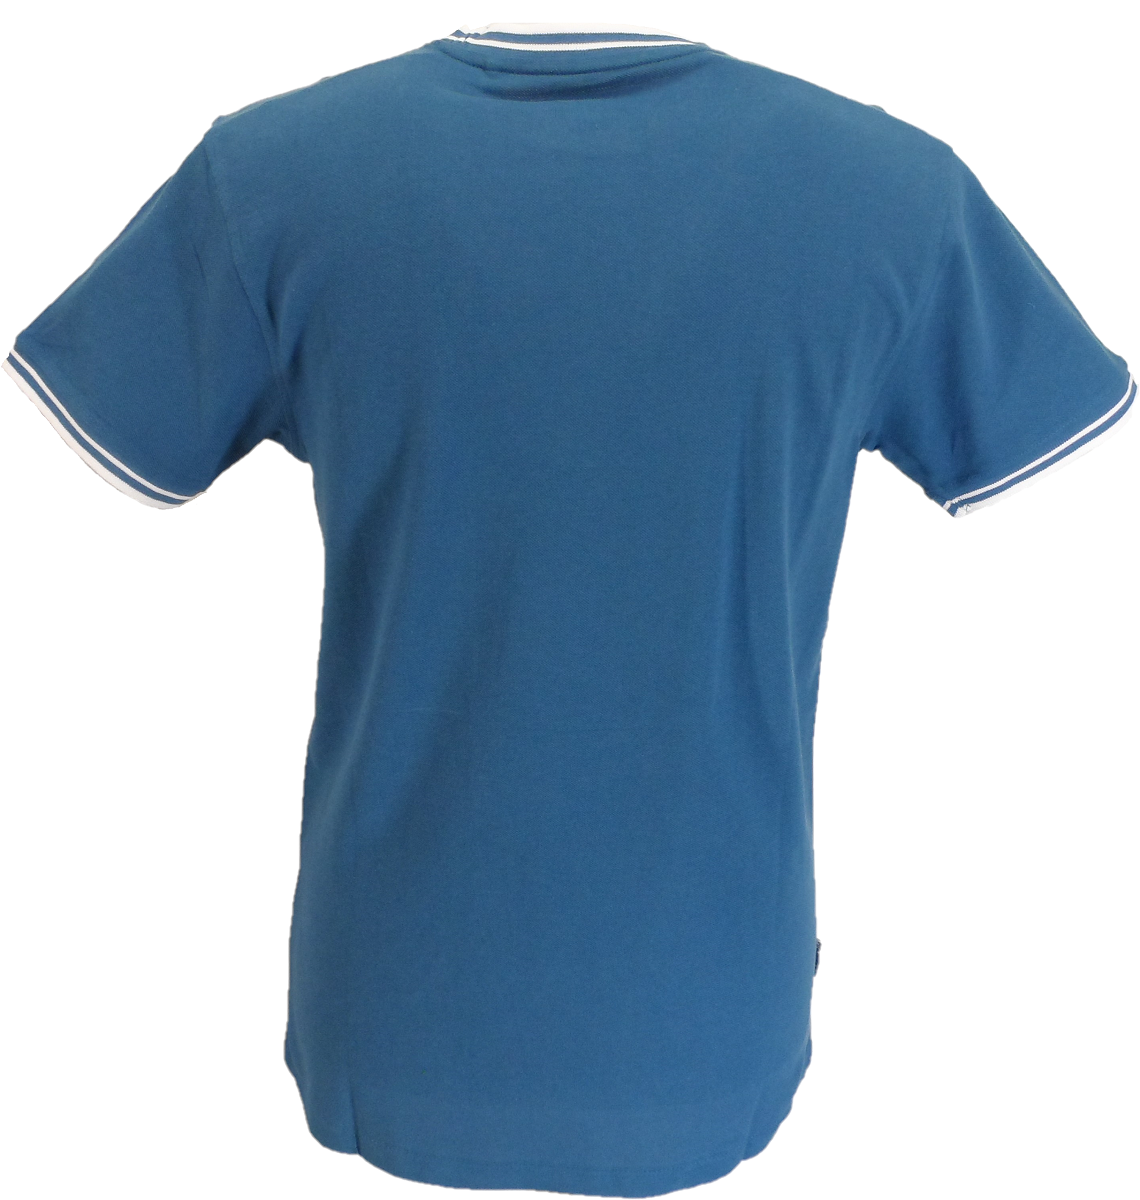 Lambretta Dark Blue 100% Cotton Tipped Pique Retro T Shirt